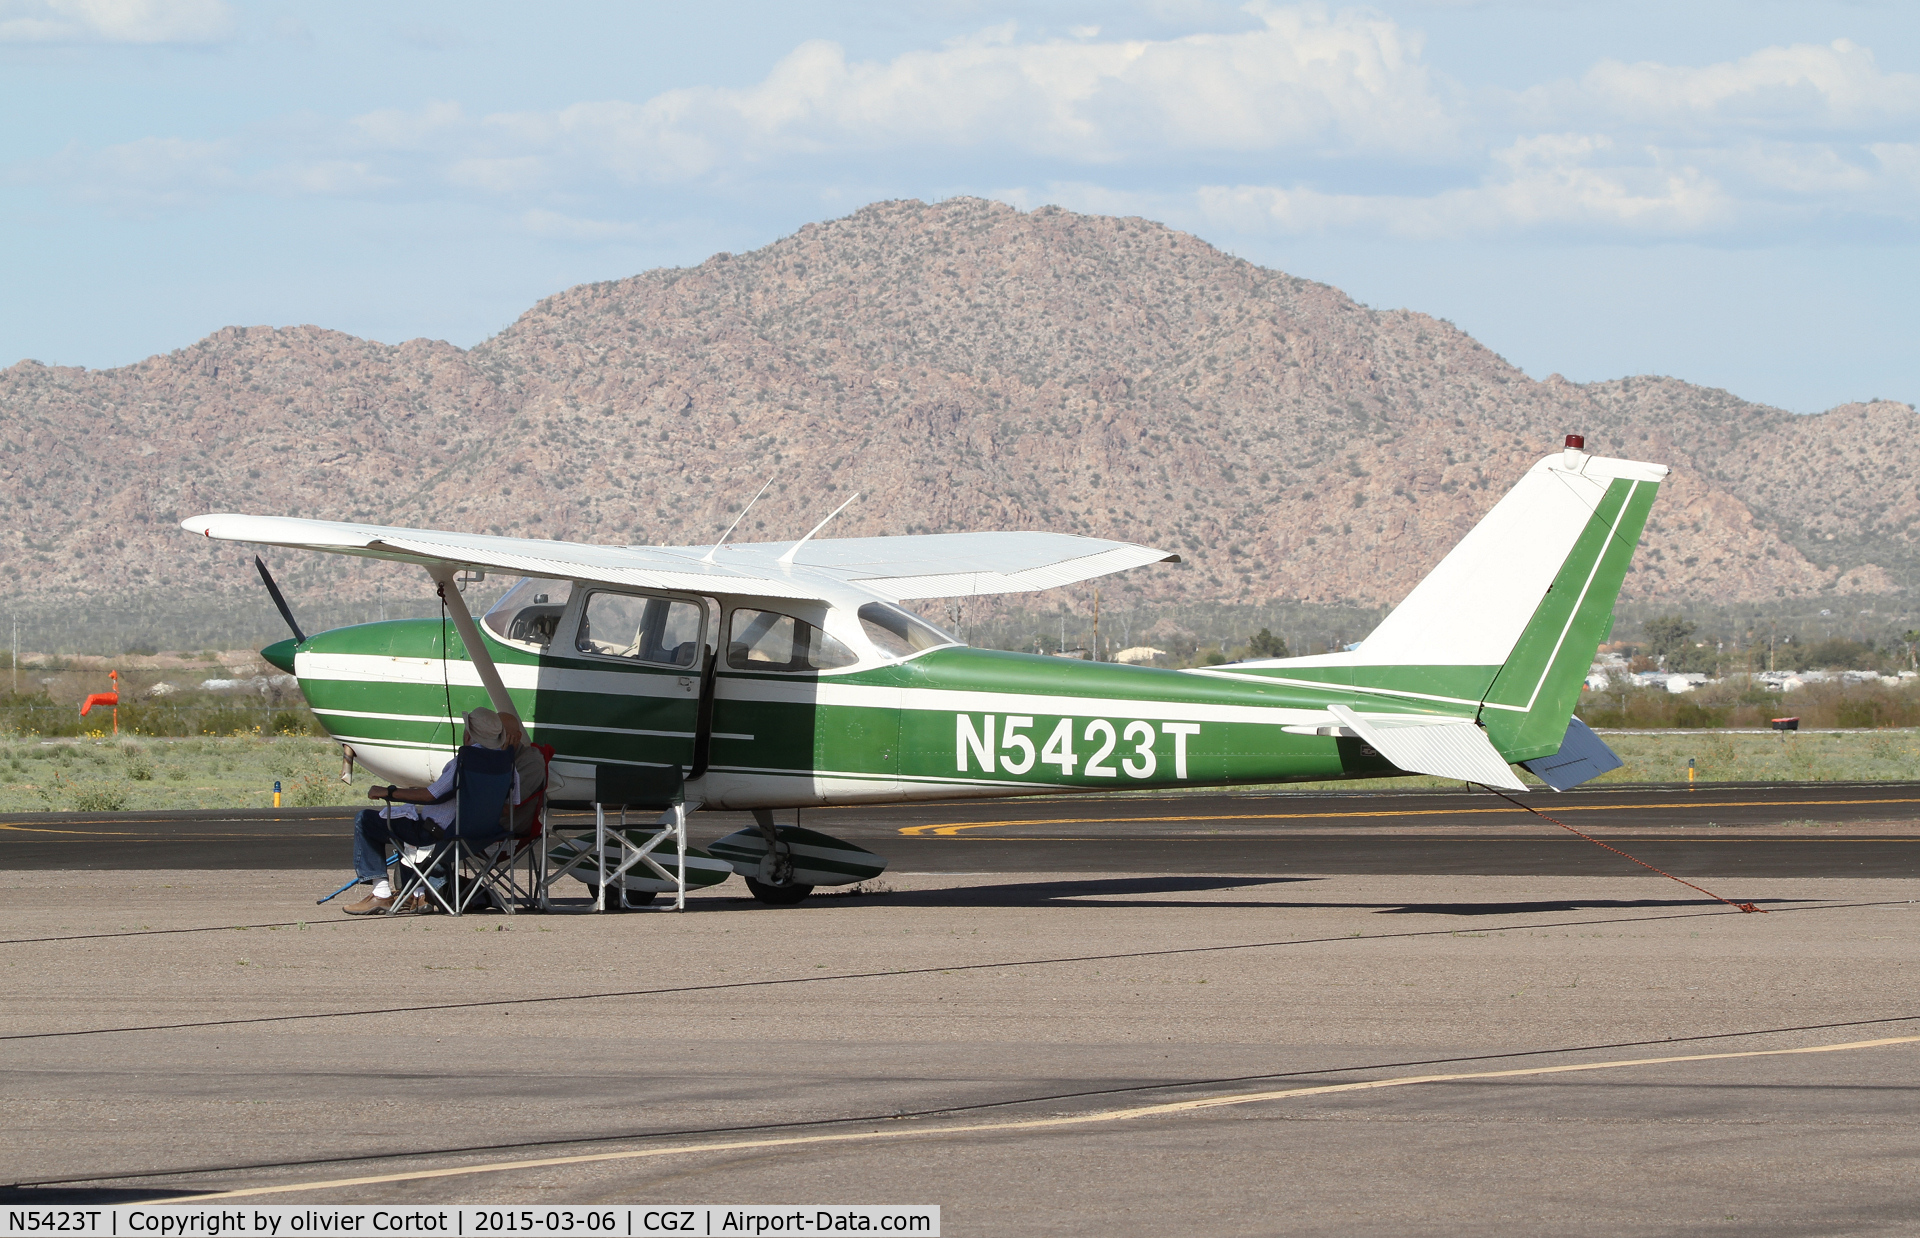 N5423T, 1964 Cessna 172E C/N 17251323, enjoying some rest under the arizona sun